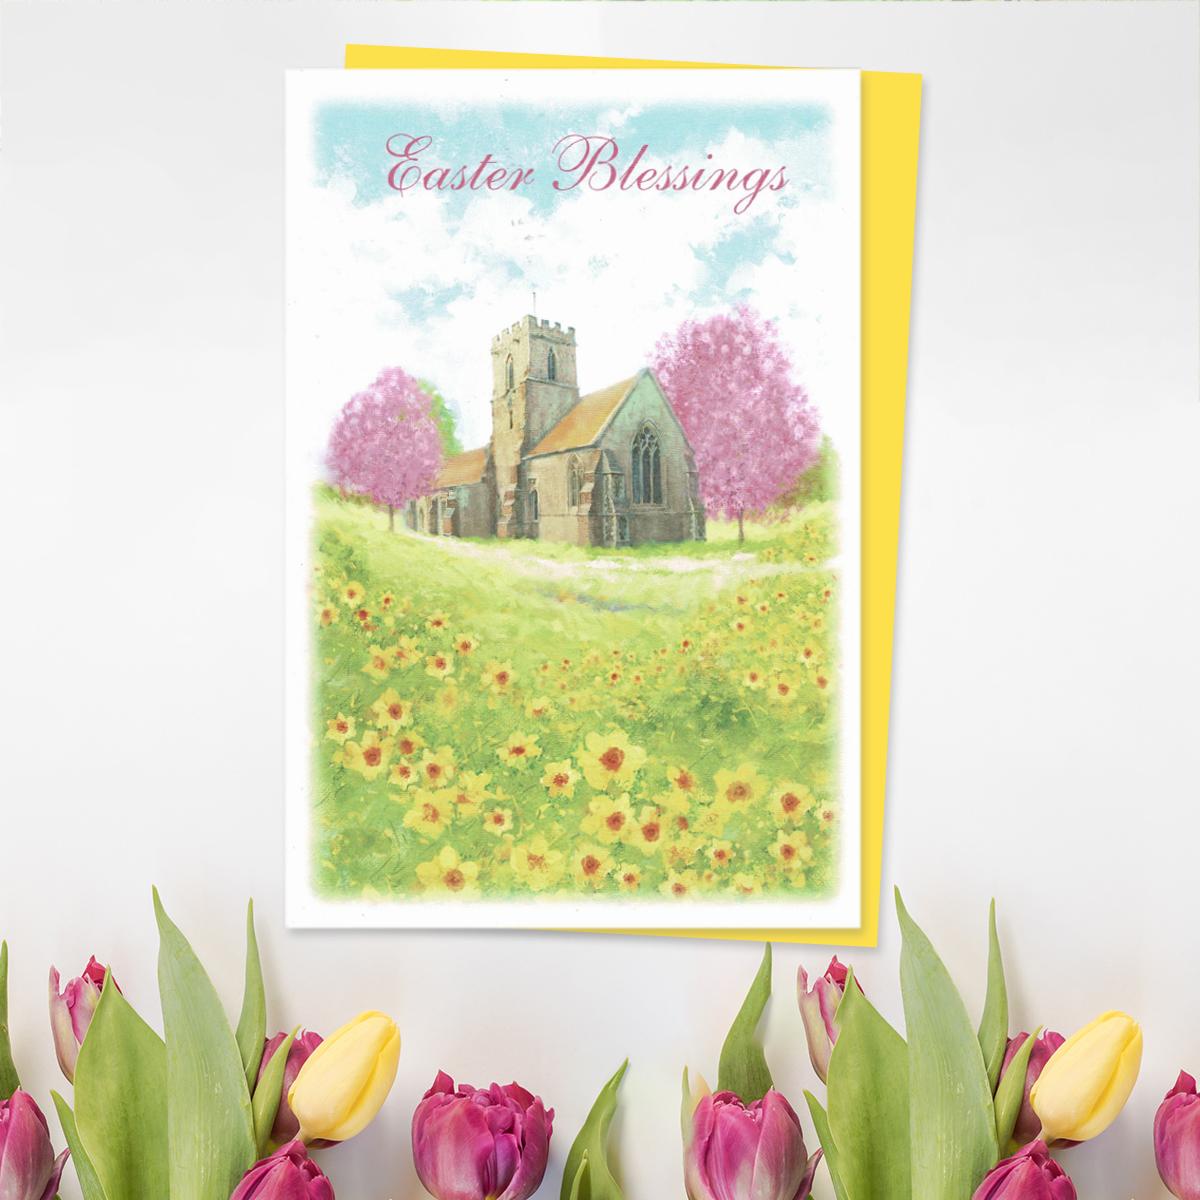 Easter Blessings Easter Card Alongside Its Yellow Envelope